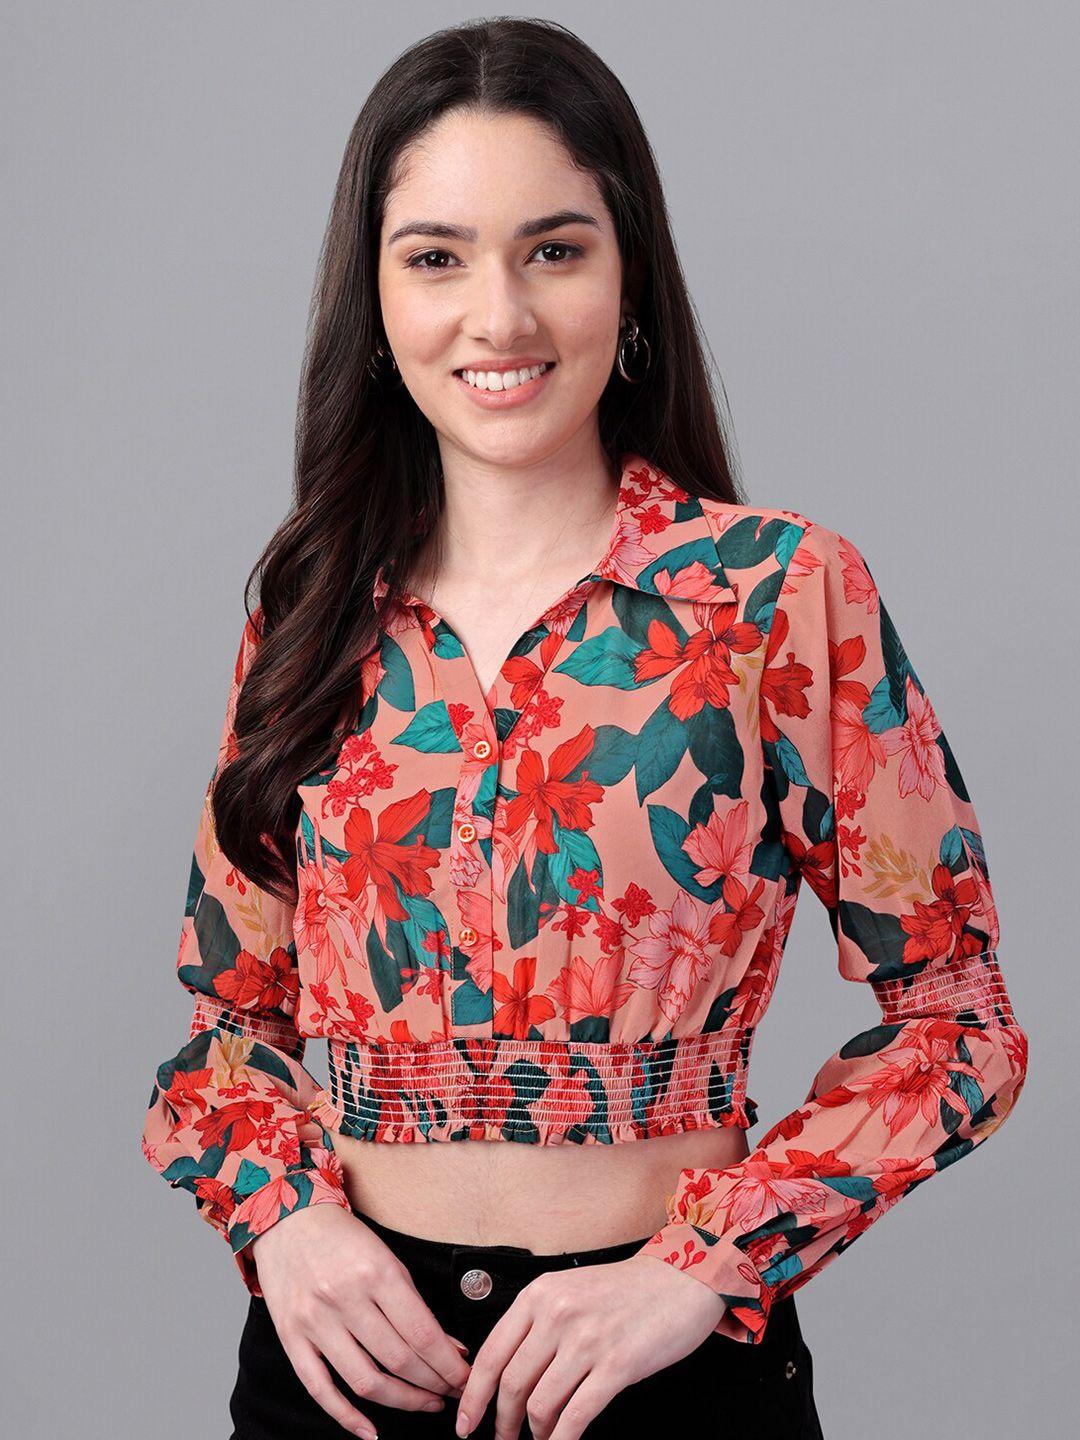 masakali co women floral printed shirt style crop top